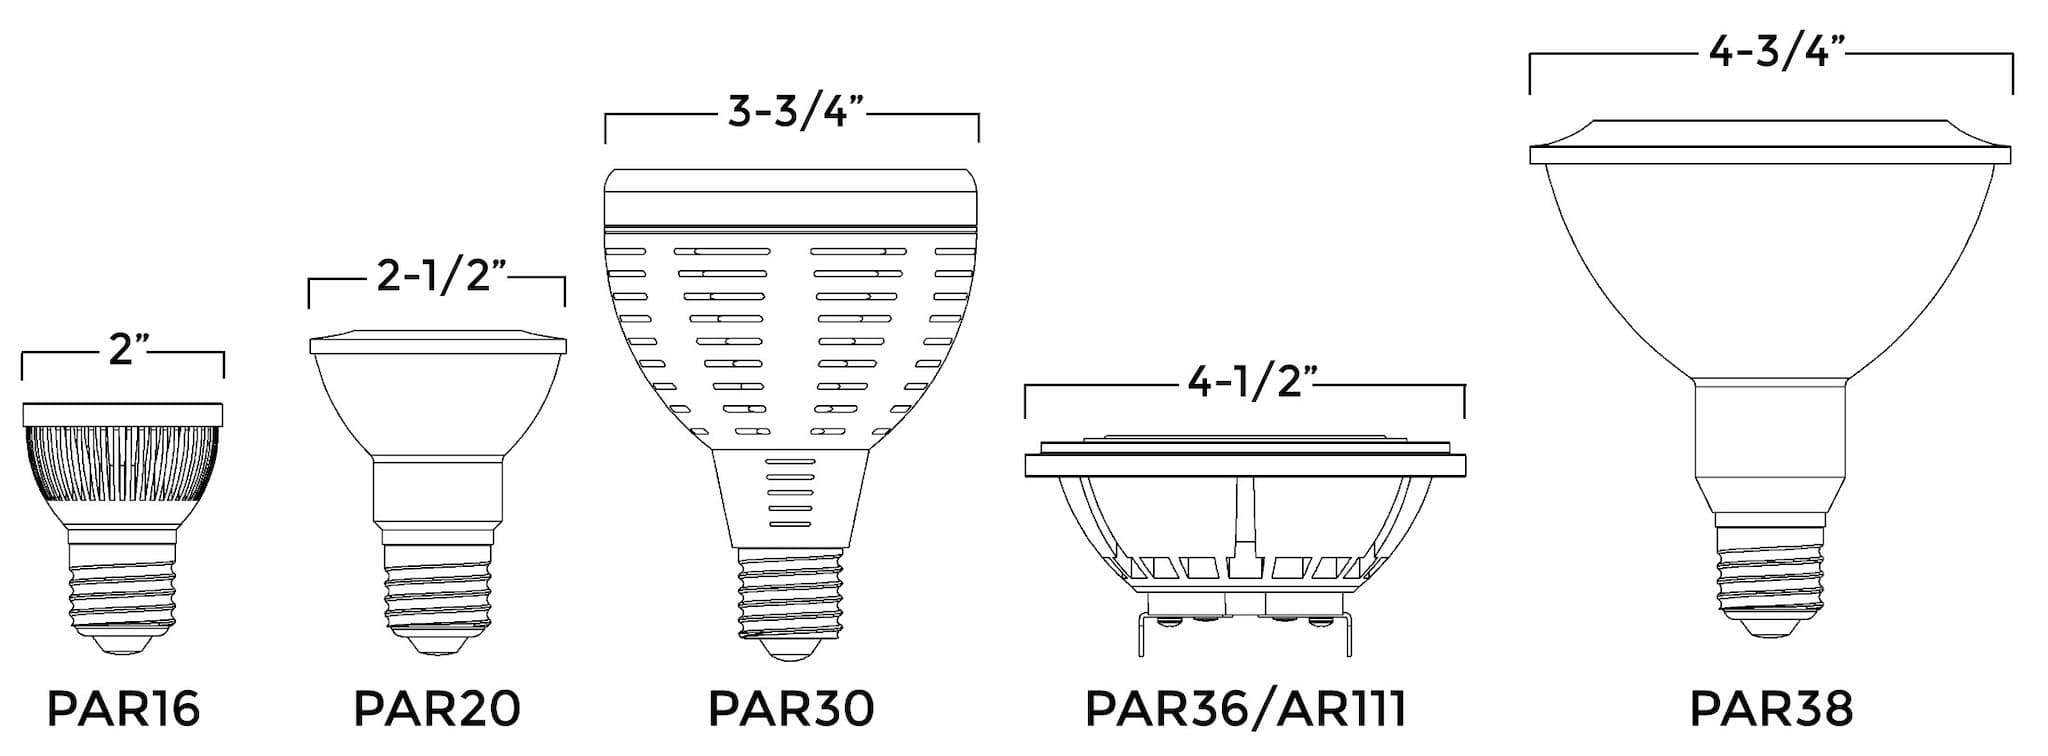 LED PAR36 Base Types